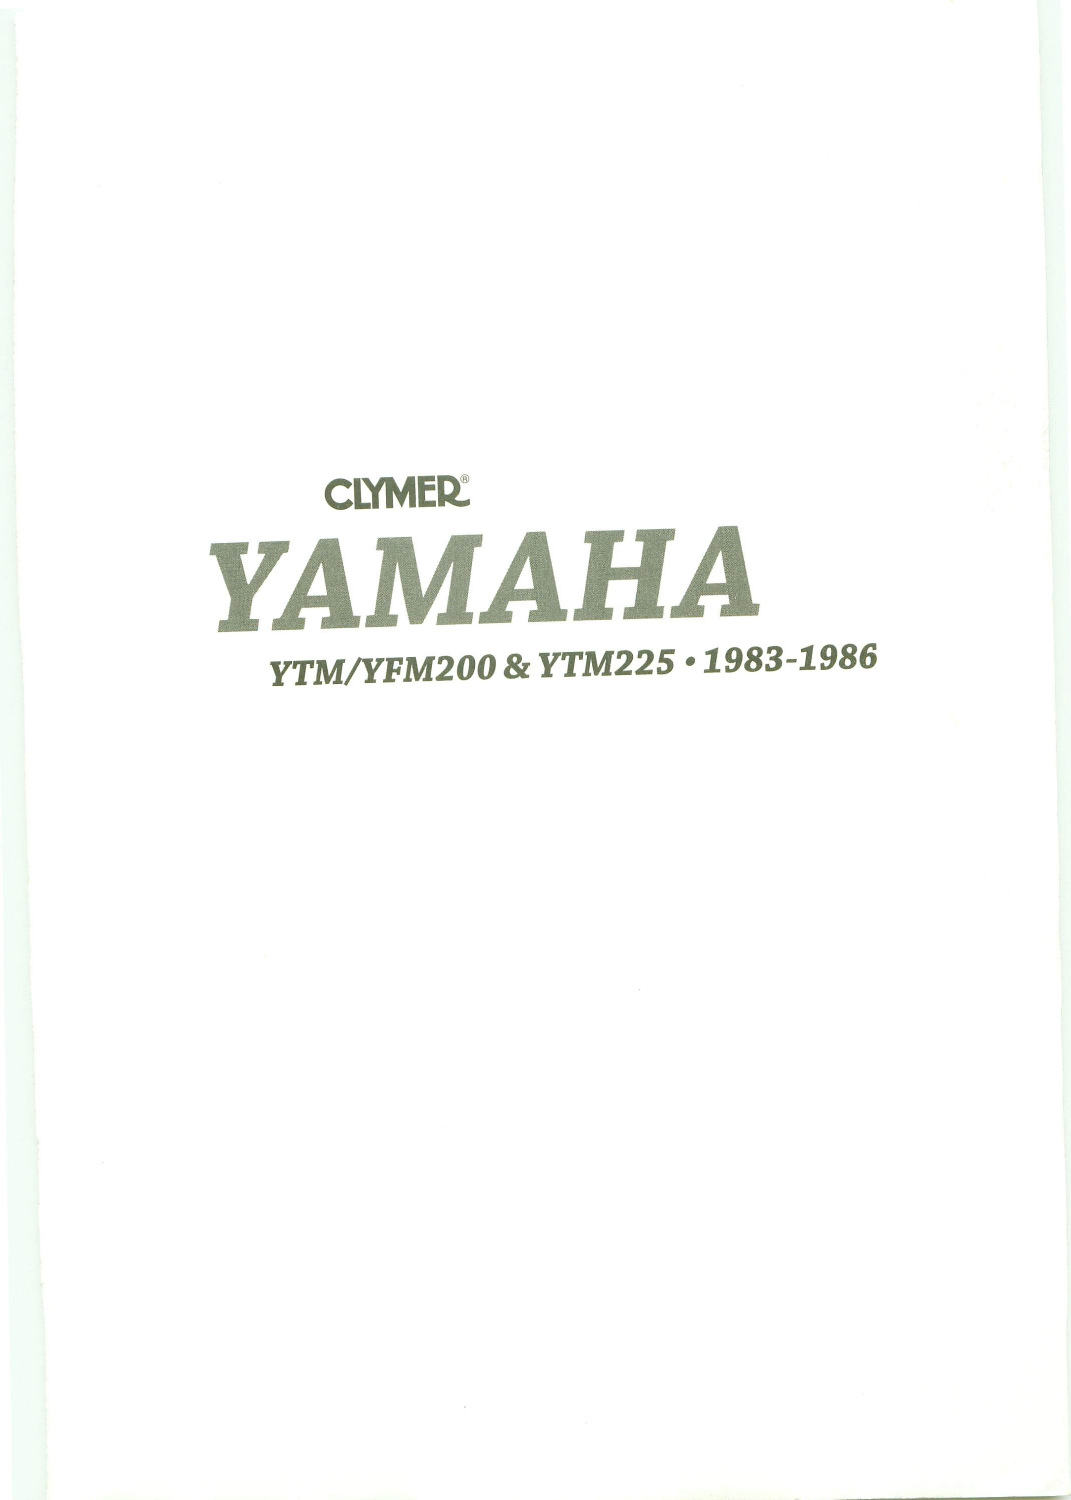 1983-1986 Yamaha YFM200, YTM200, YTM225 service and shop manual Preview image 6